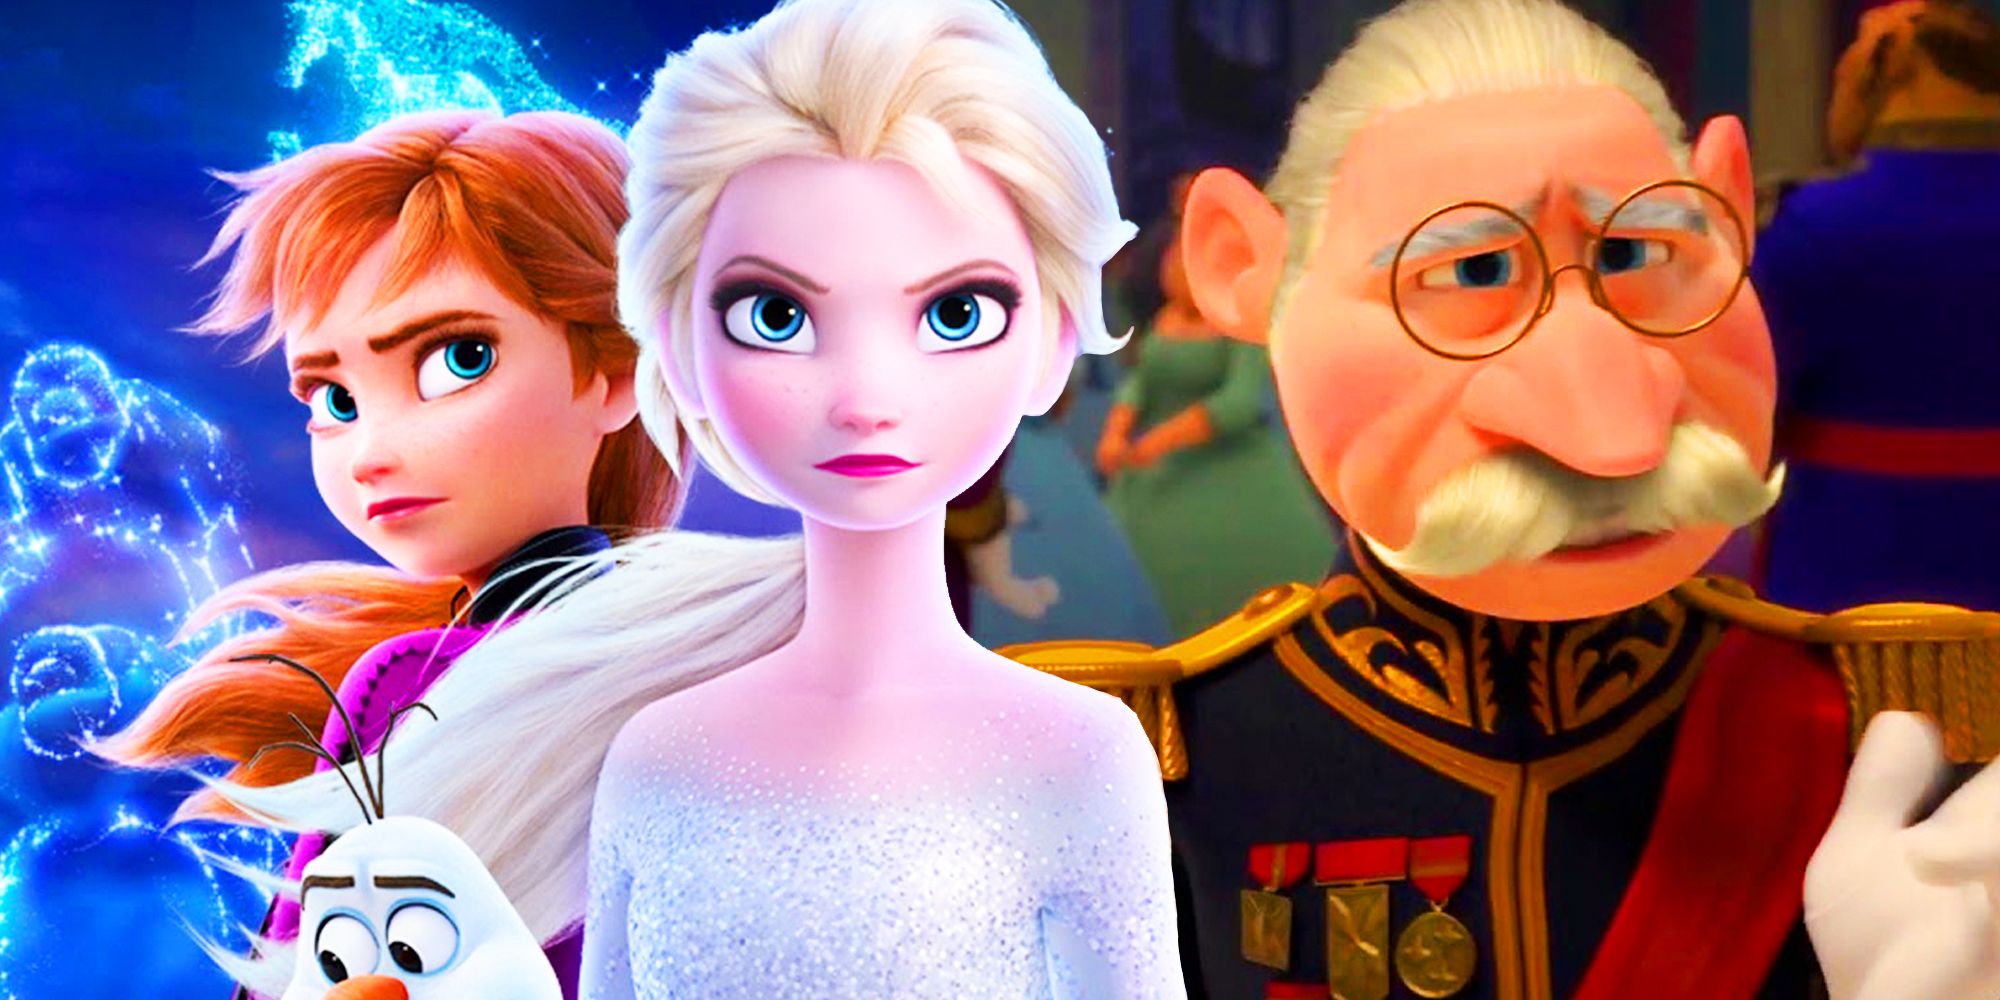 Anna, Elsa, and the Duke of Weselton